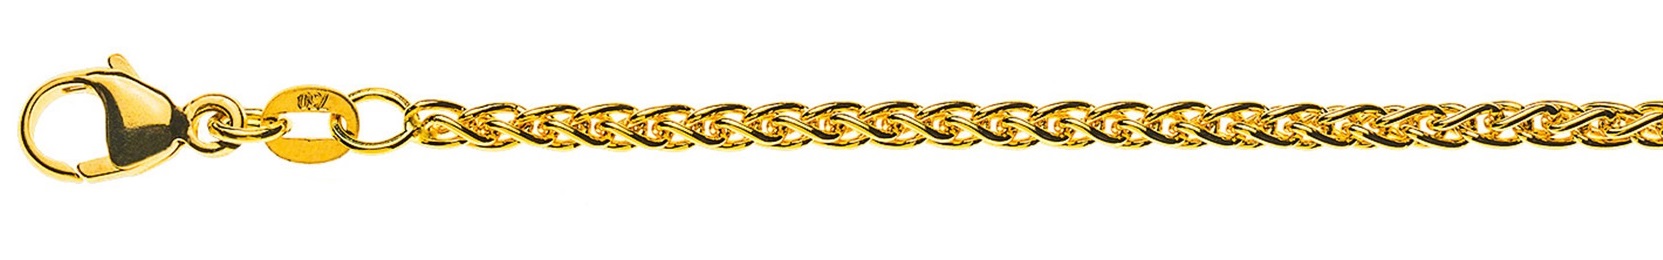 AURONOS Prestige Necklace yellow gold 18K cable chain 45cm 2.5mm